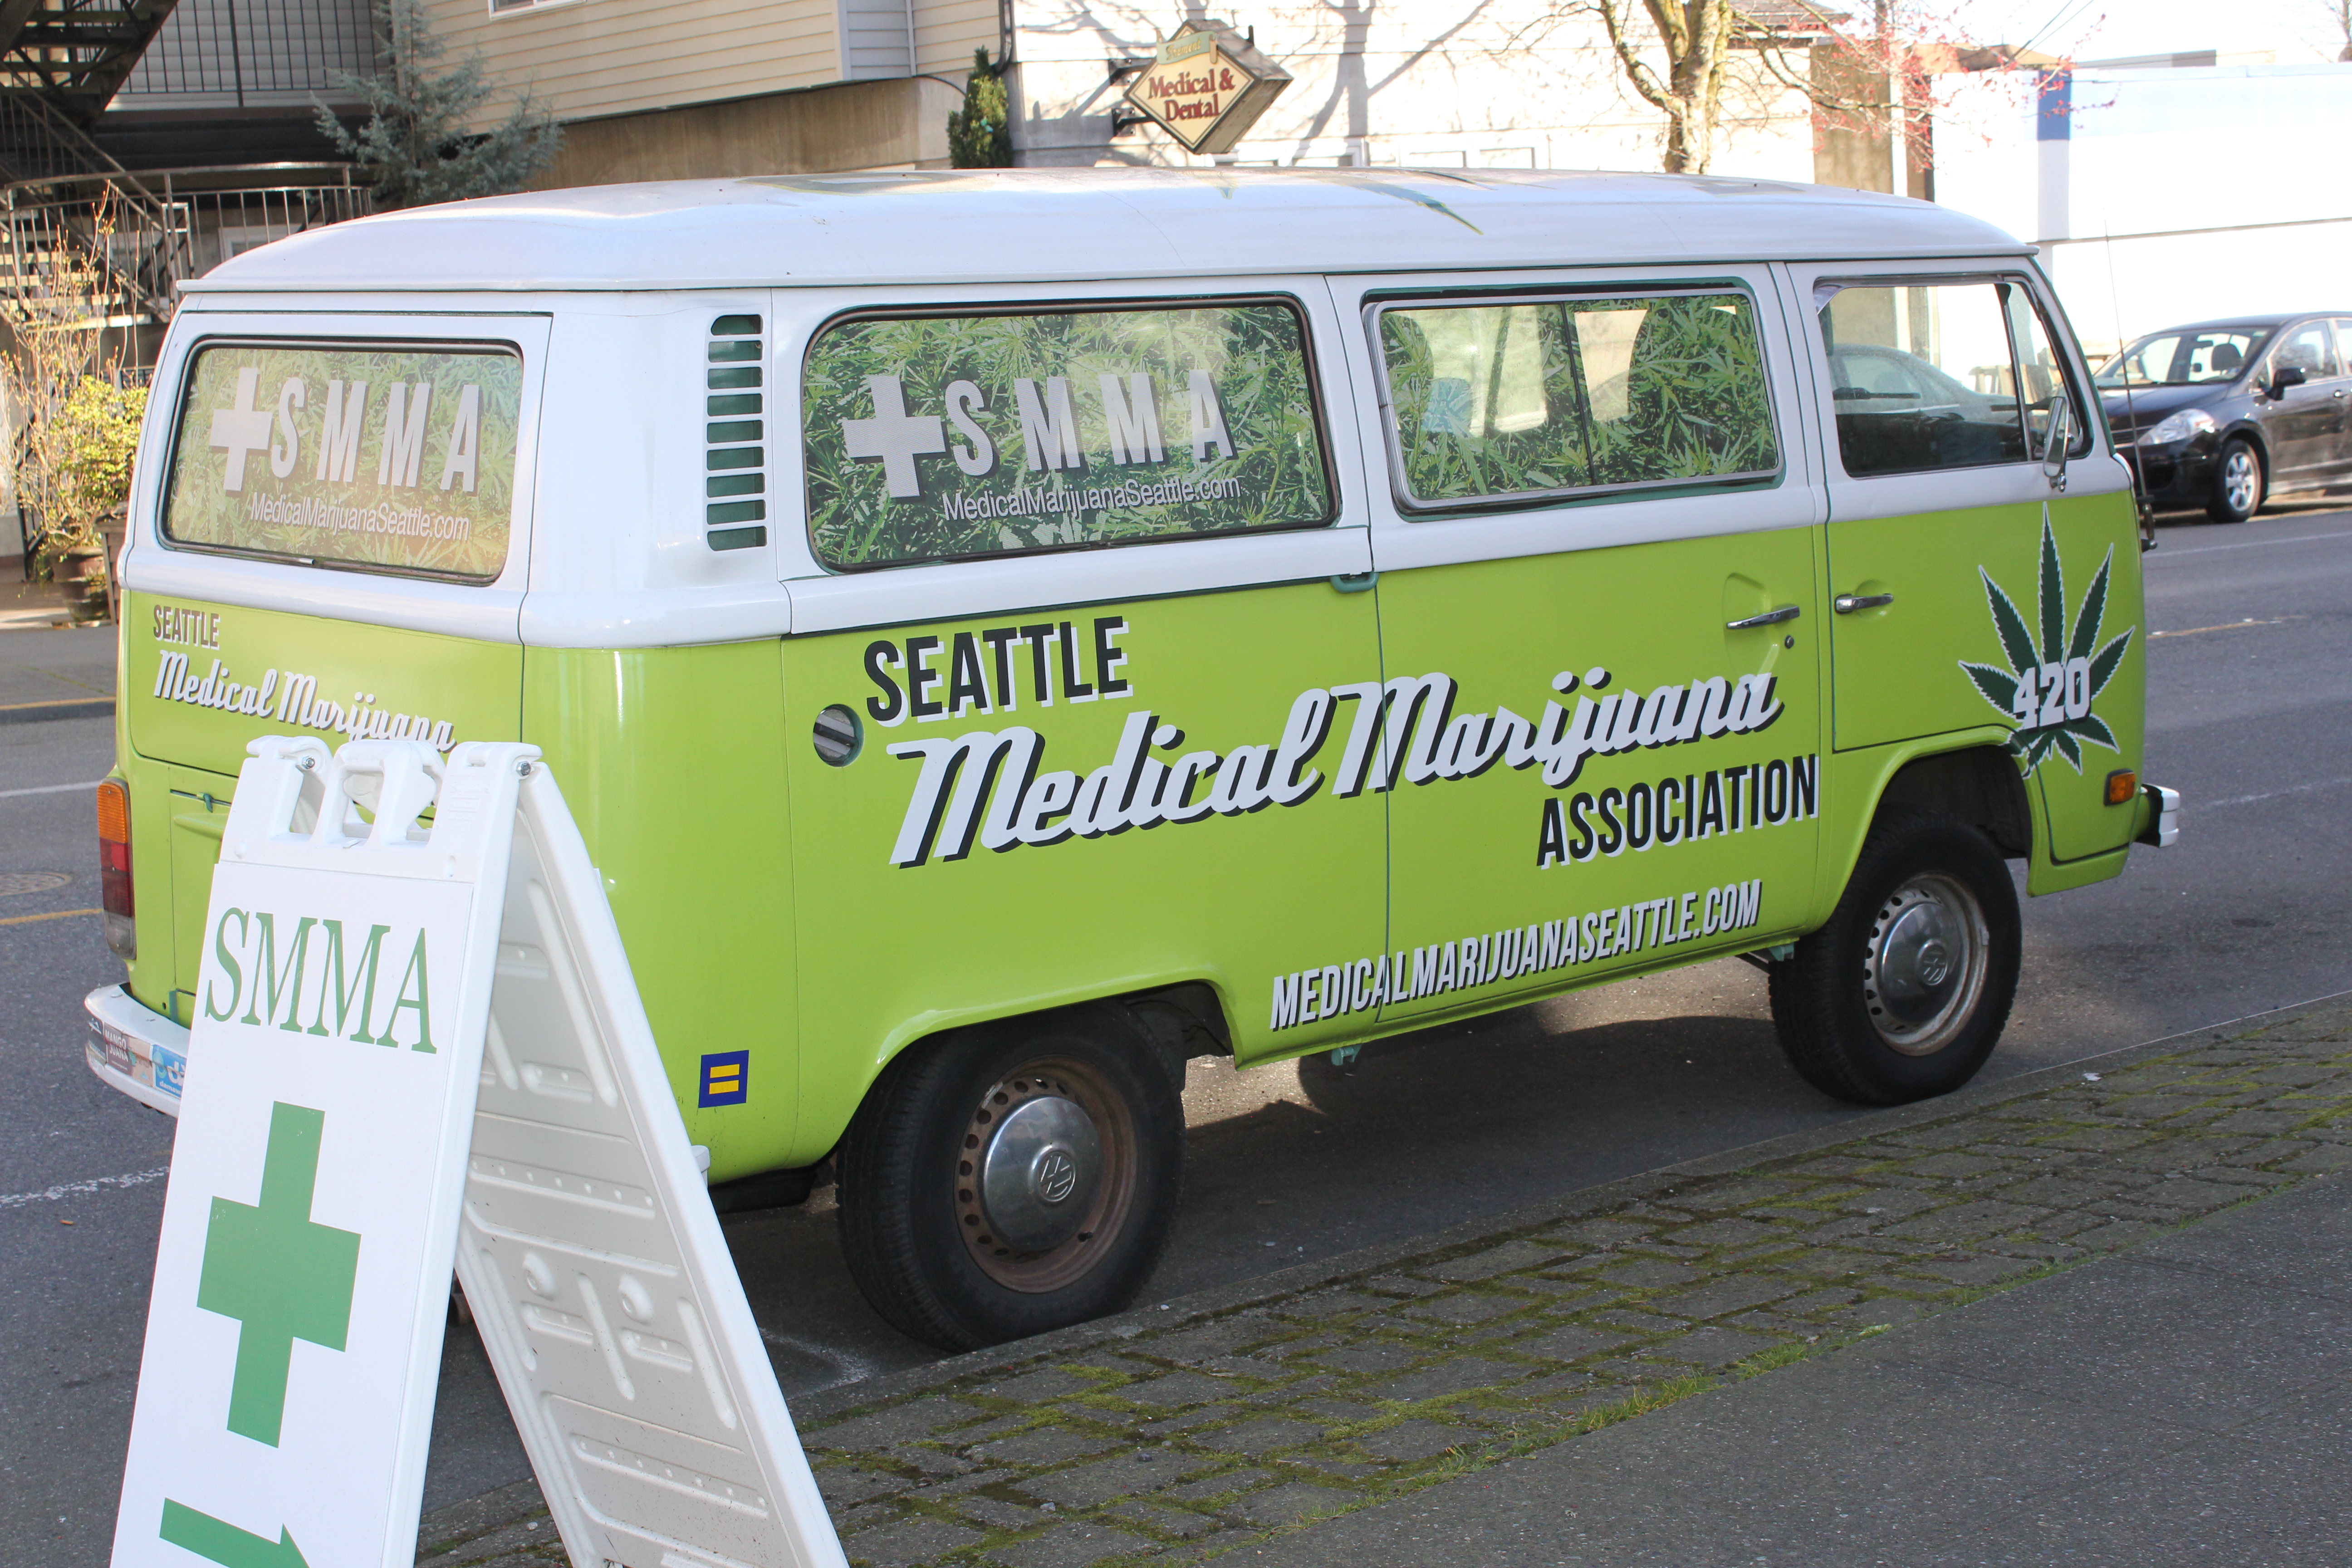 PHOTO: Photo of Seattle Medical Marijuana Association van. Photo by Signal reporter Robin Timme.